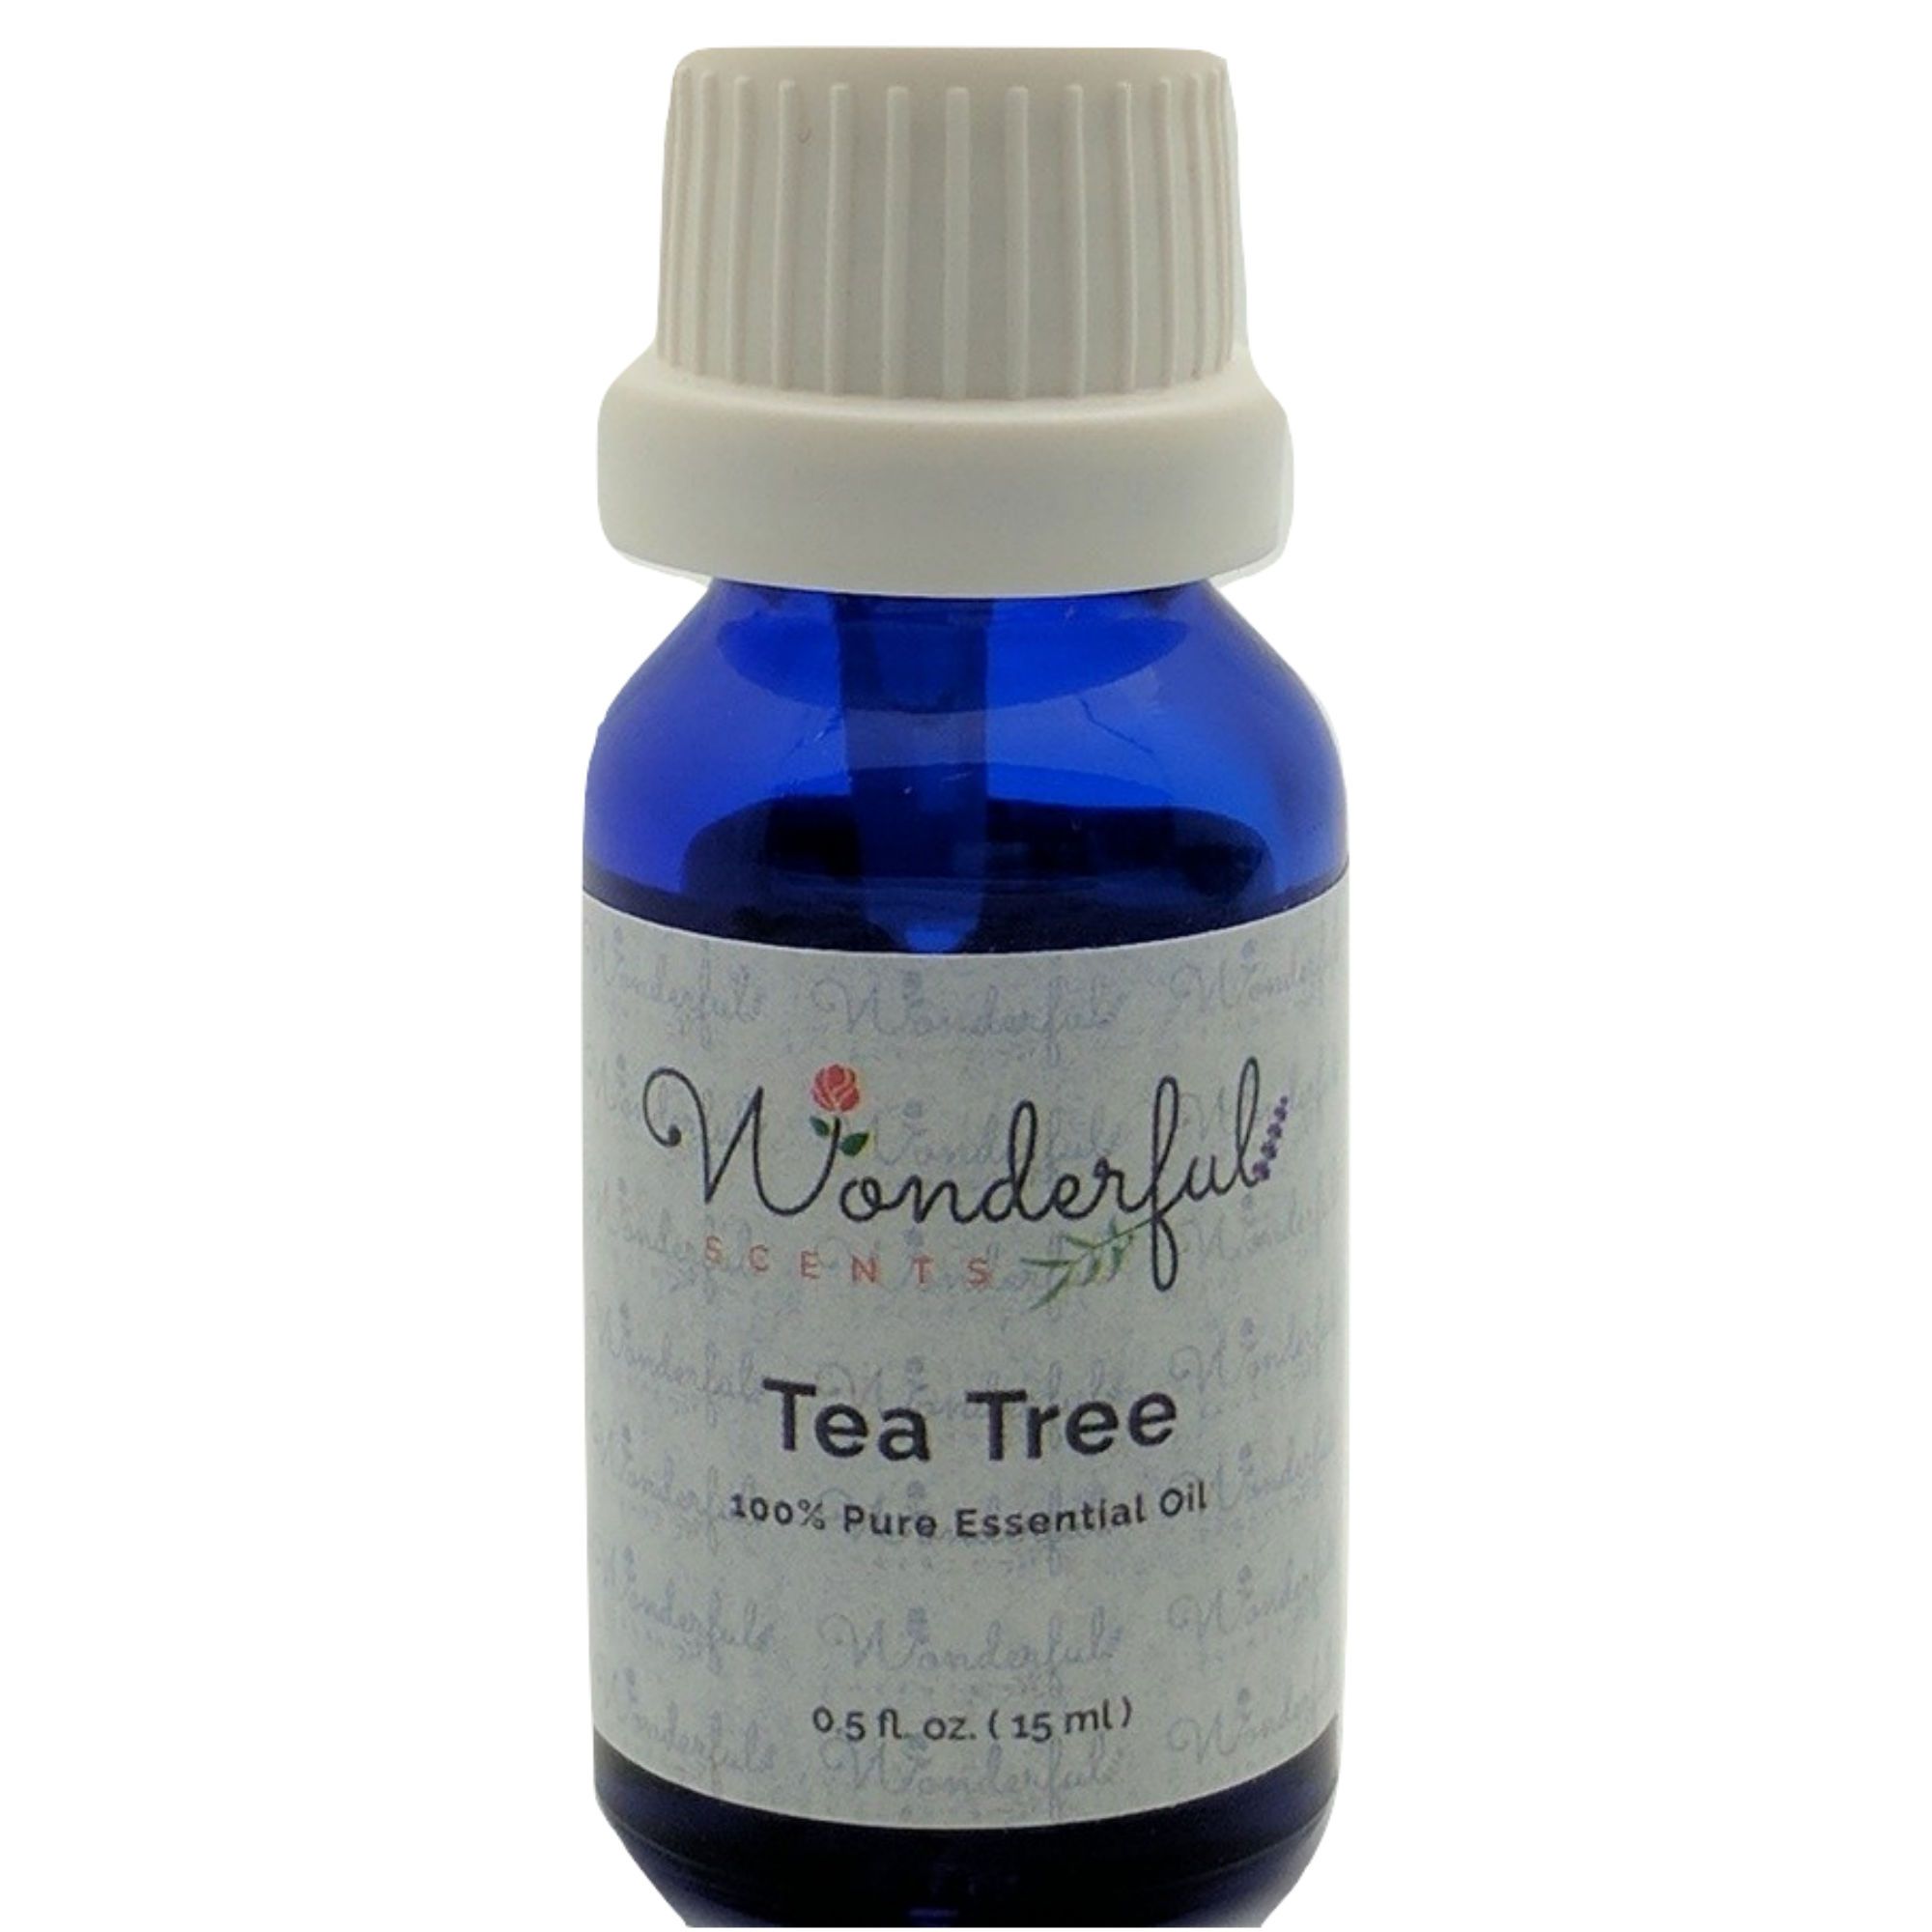 Wonderful Scents Tea Tree Essential Oil 15 ml Bottle